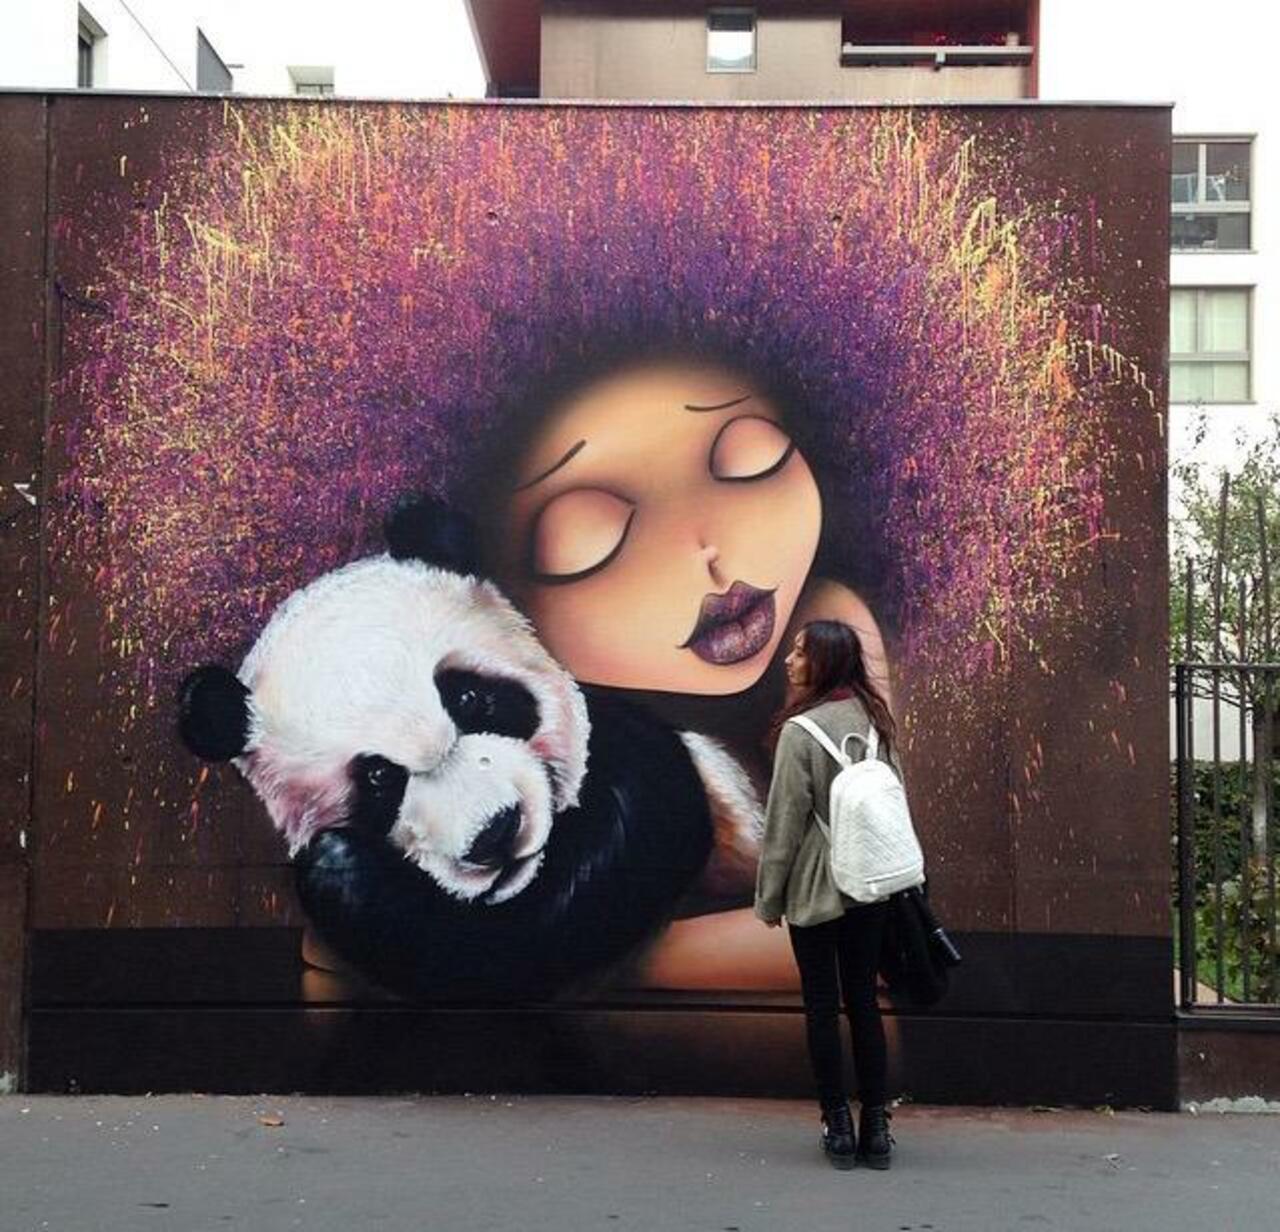 #satvadesignstudio : Street Art by VinieGraffiti in Paris 

#art #graffiti #mural #streetart http://t.co/I4cg6R7mA6